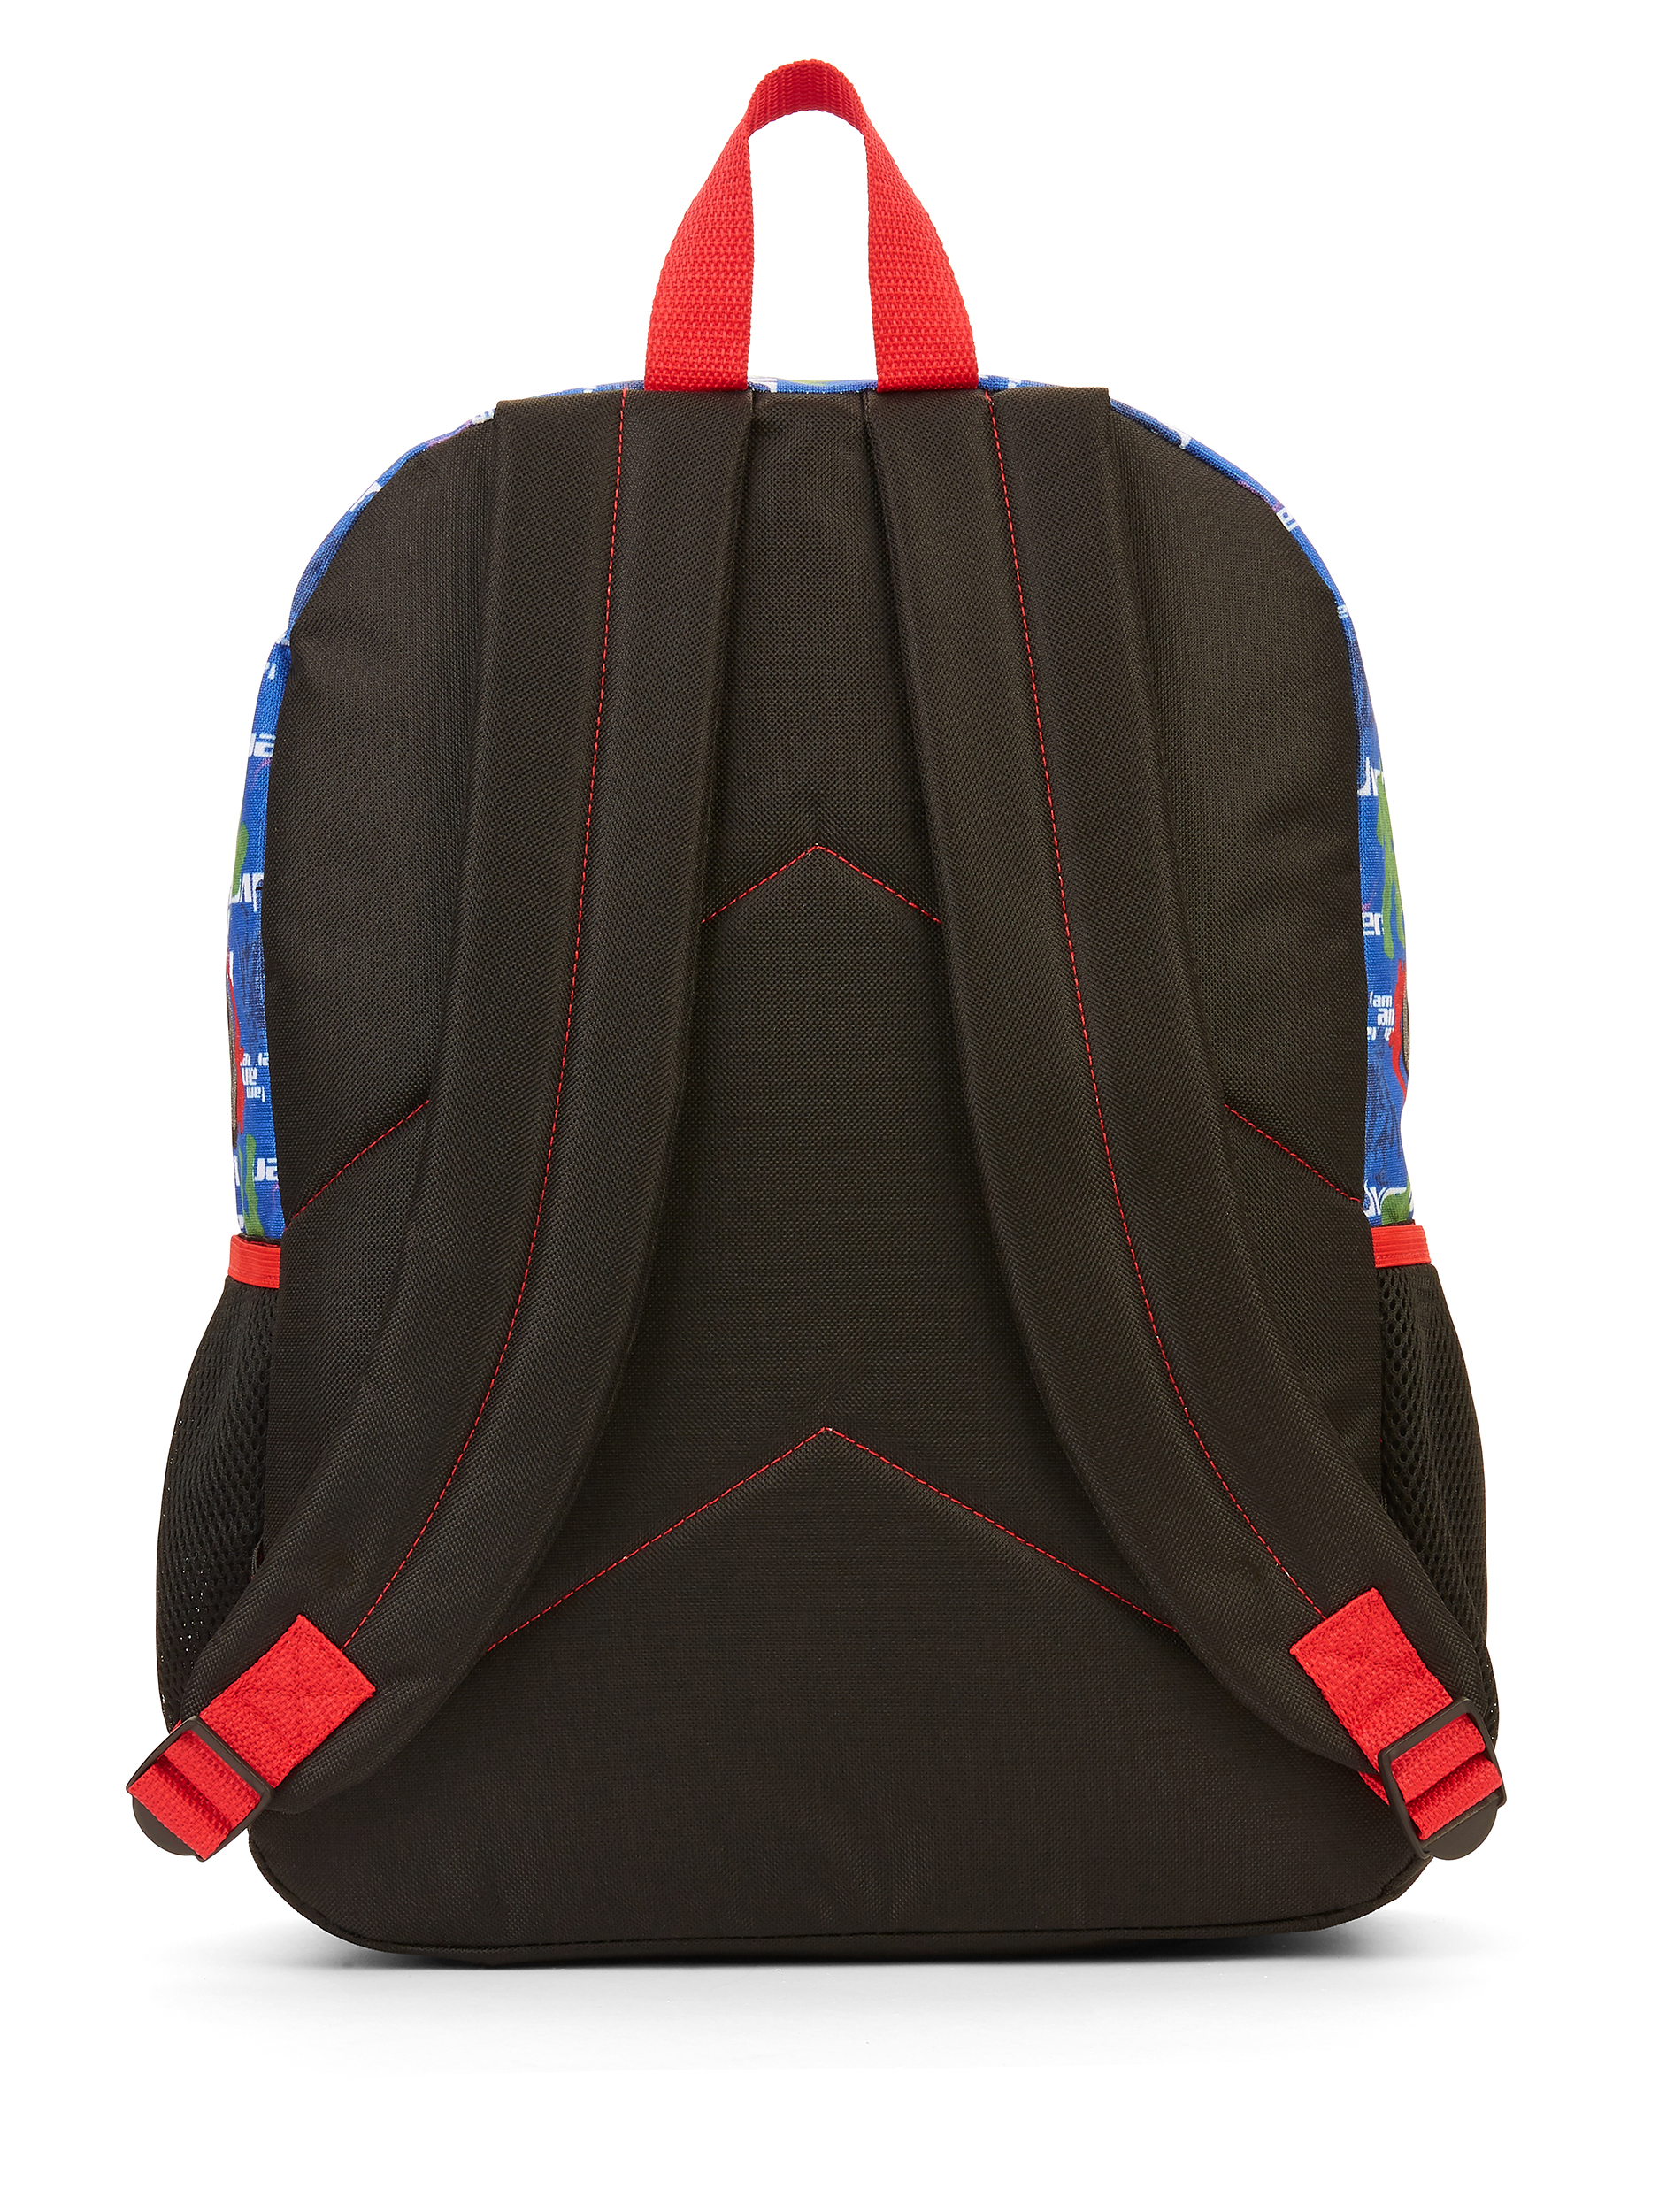 Marvel Avengers Boys' Backpack with Lunch Bag Set - image 3 of 3